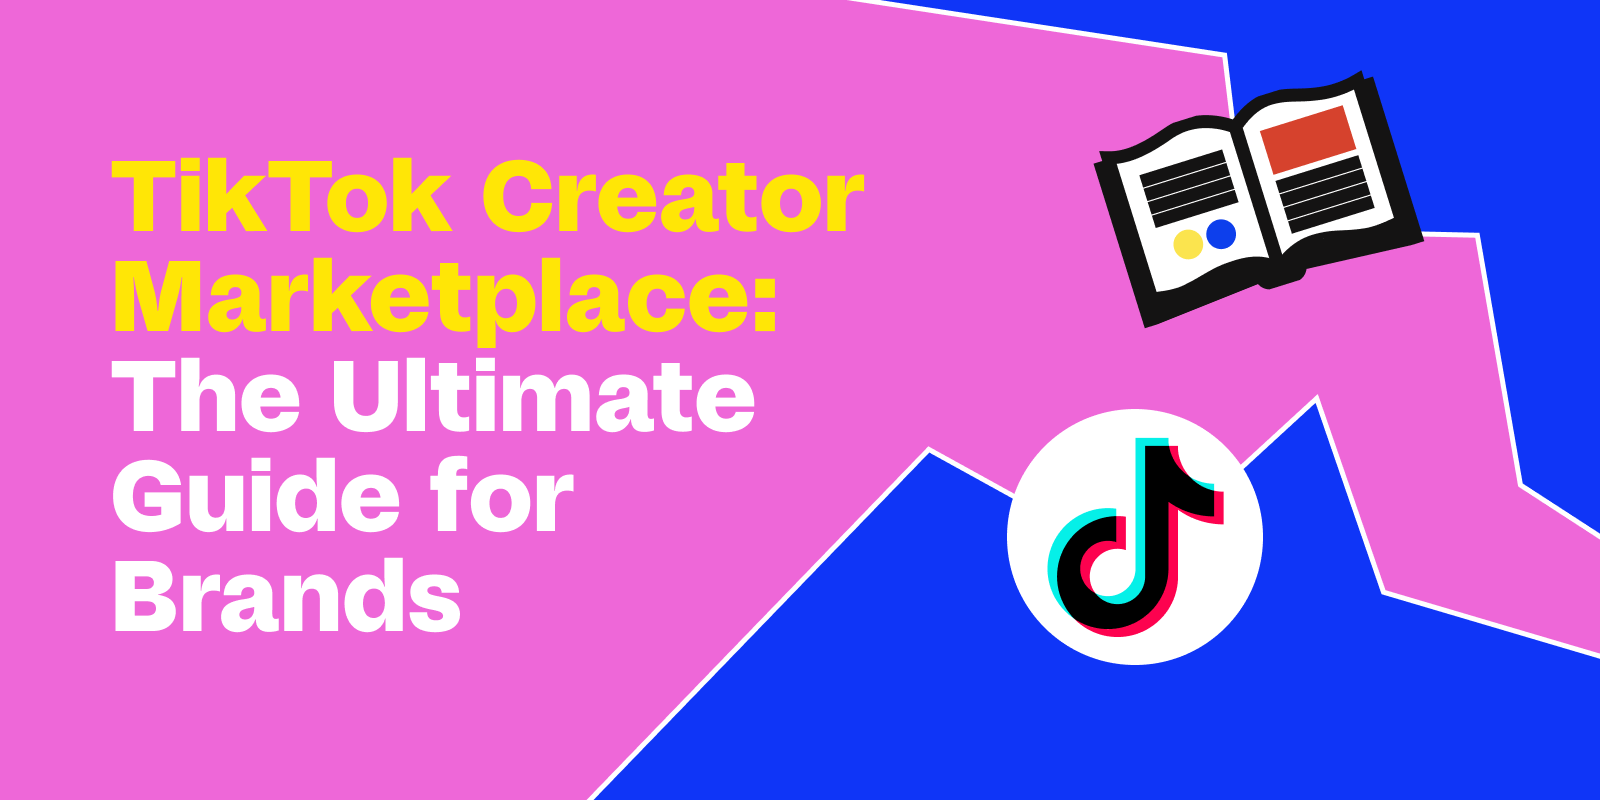 TikTok Creator Marketplace cover